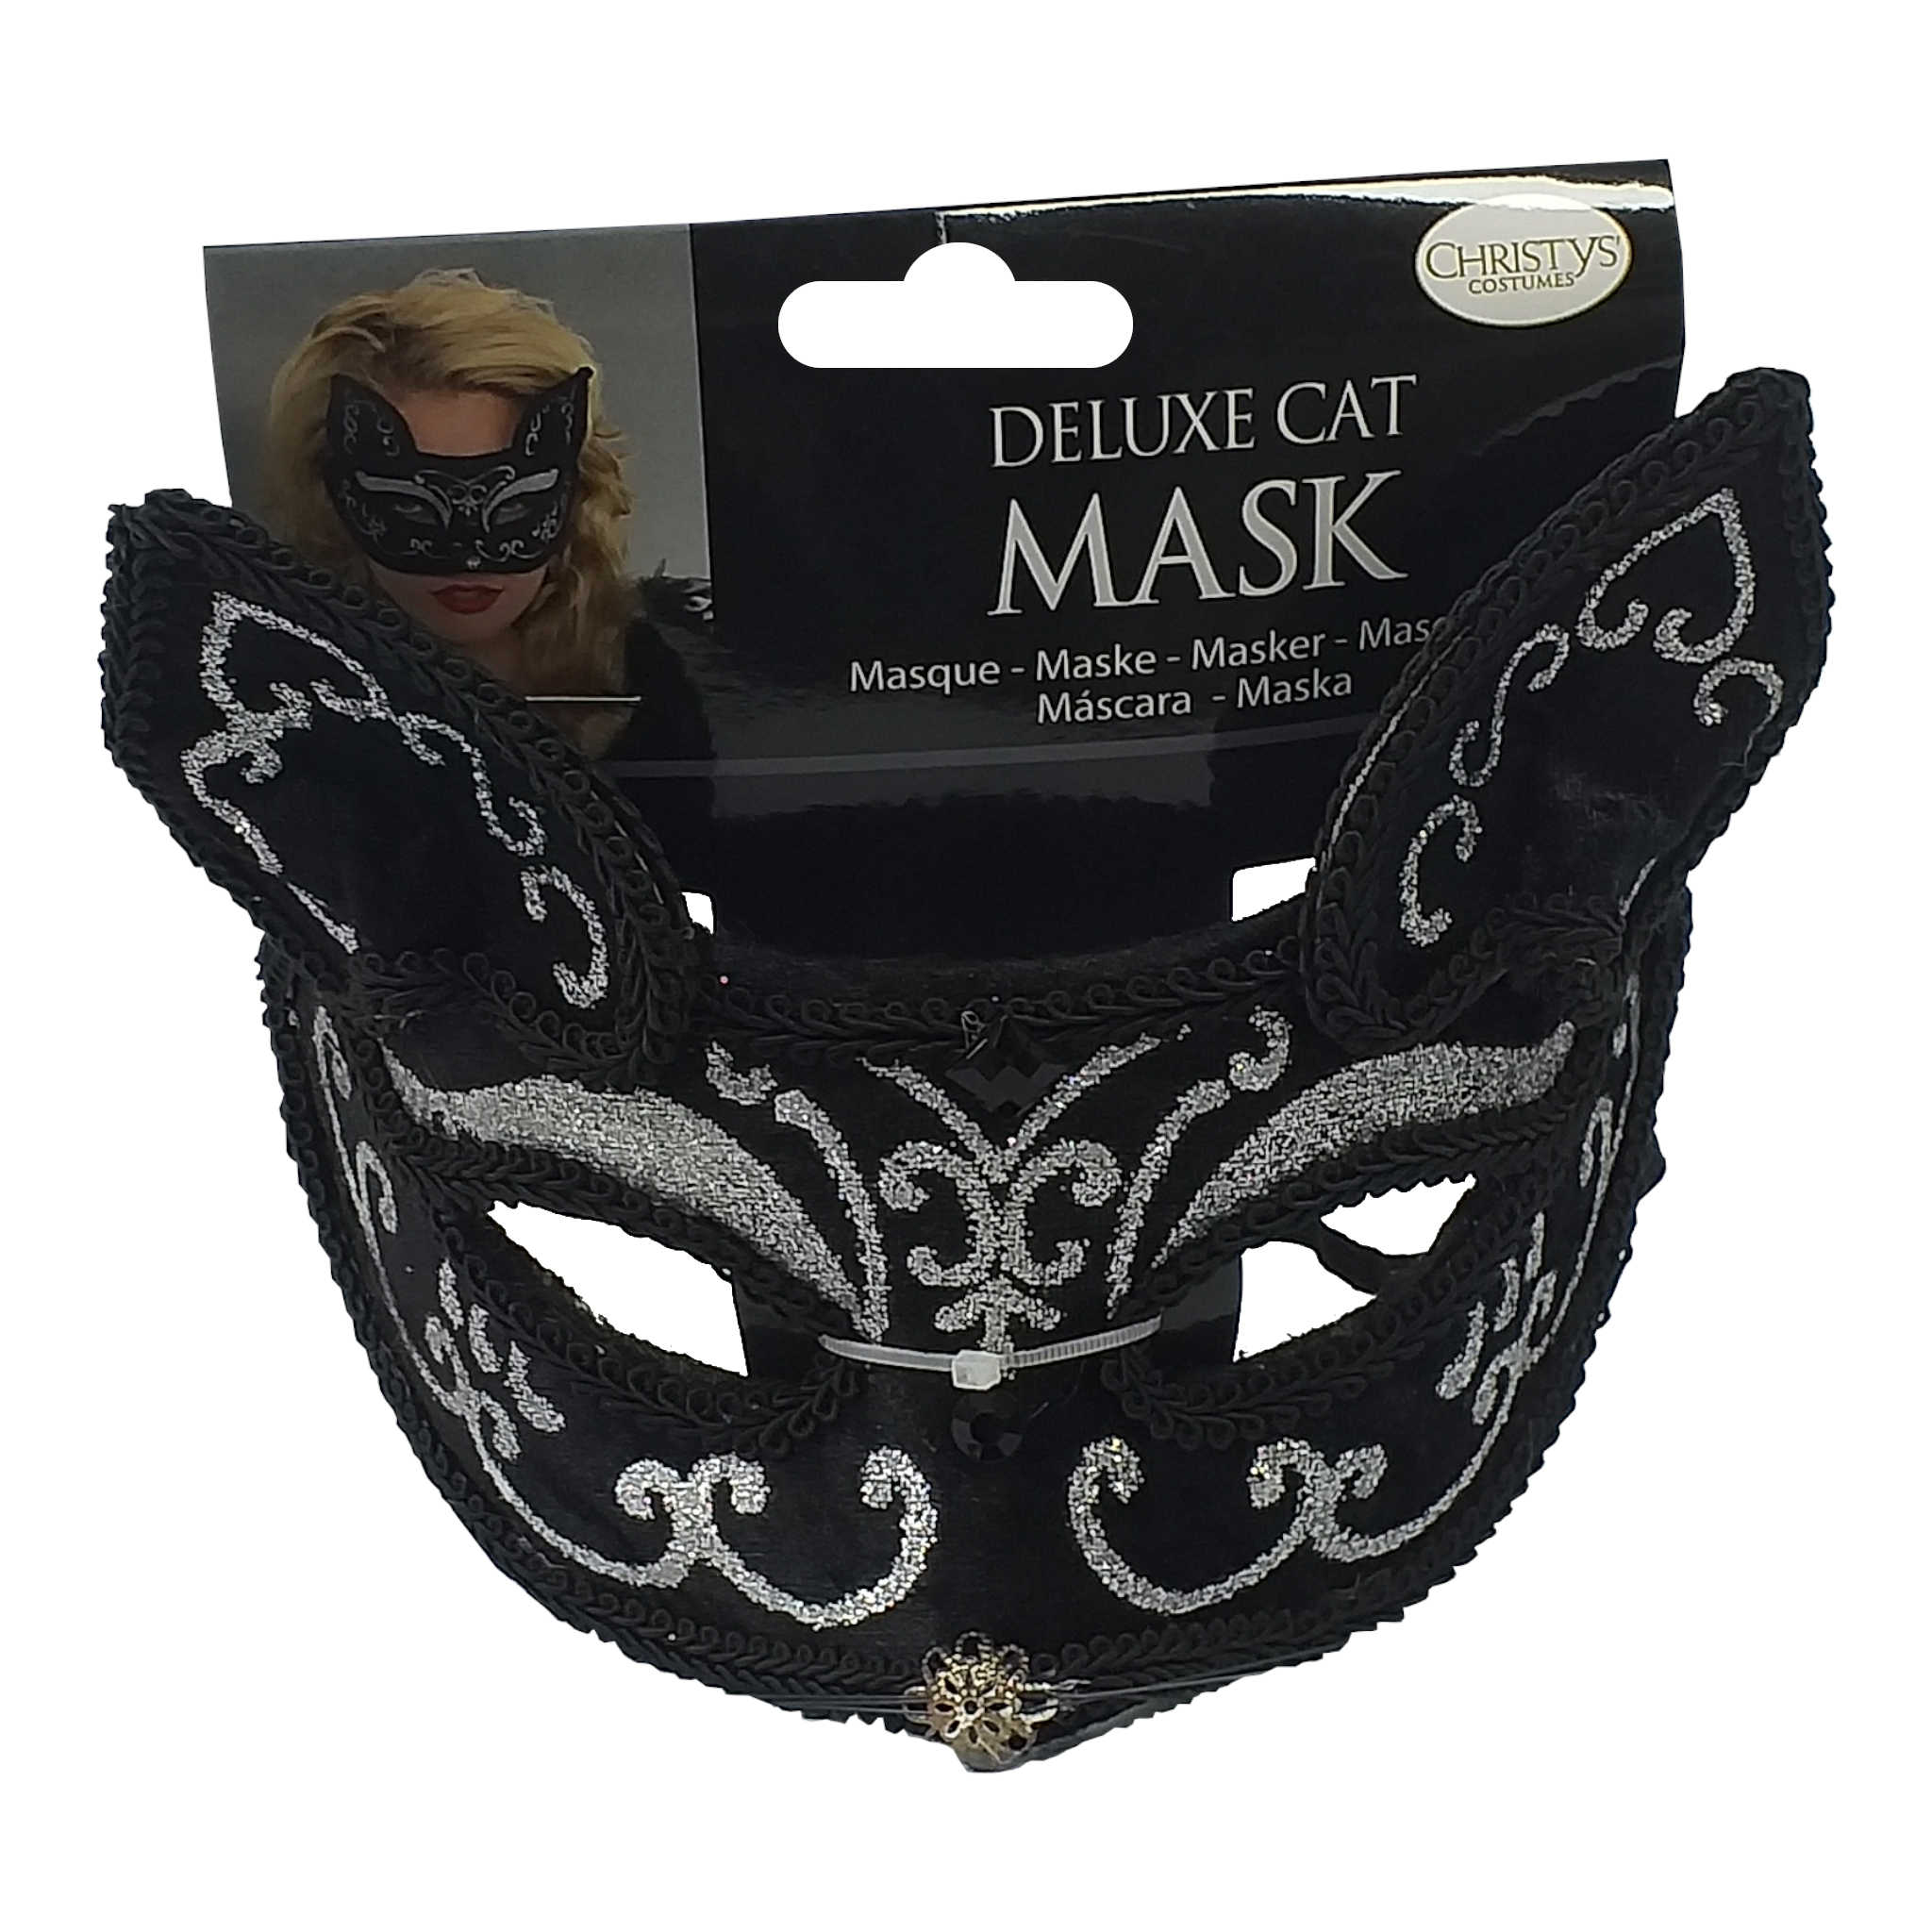 Deluxe Cat Mask